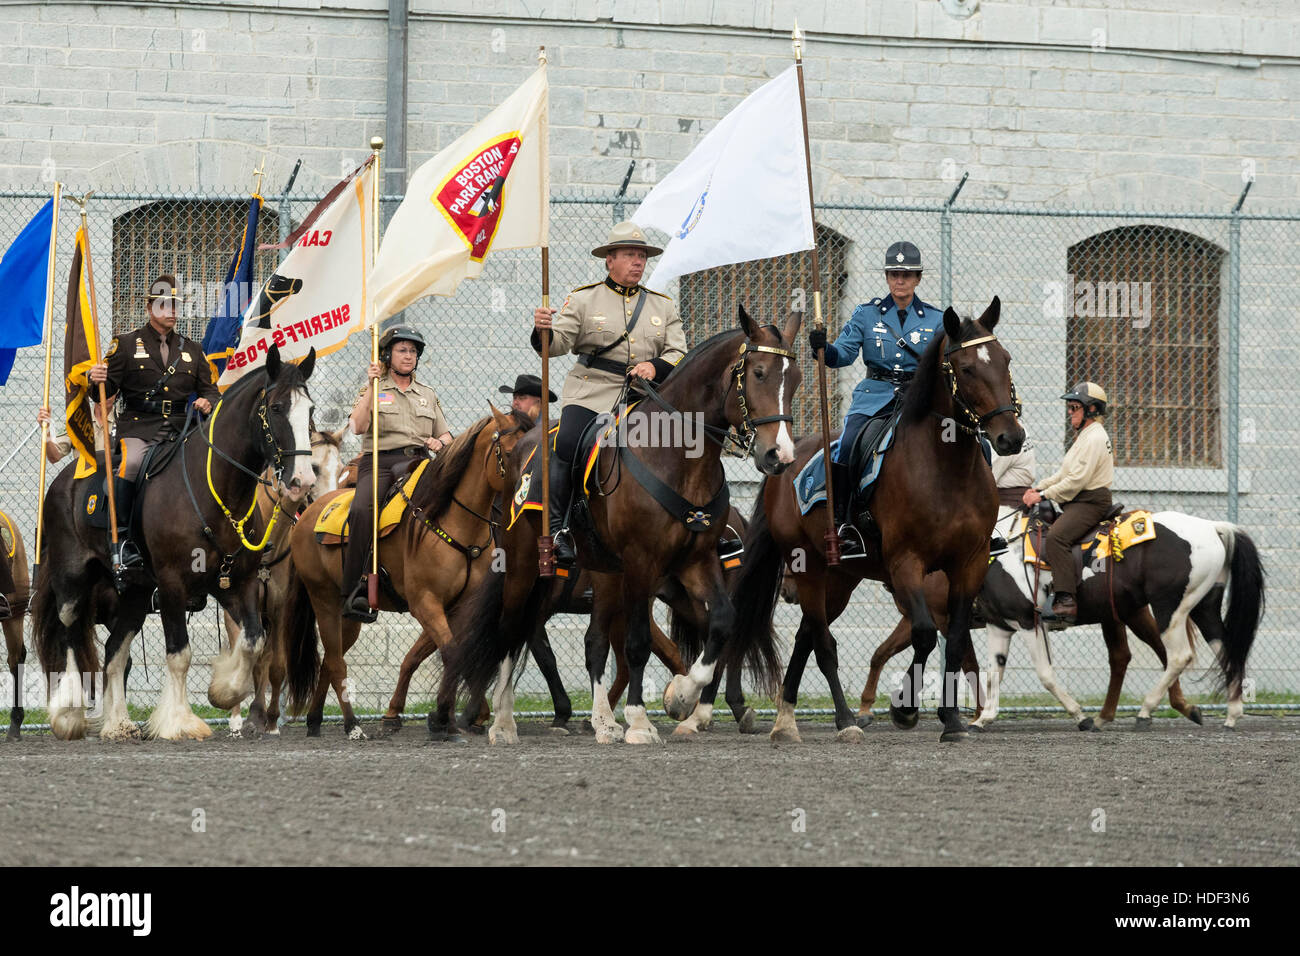 Mounted police horse Kingston Ontario Canada Stock Photo